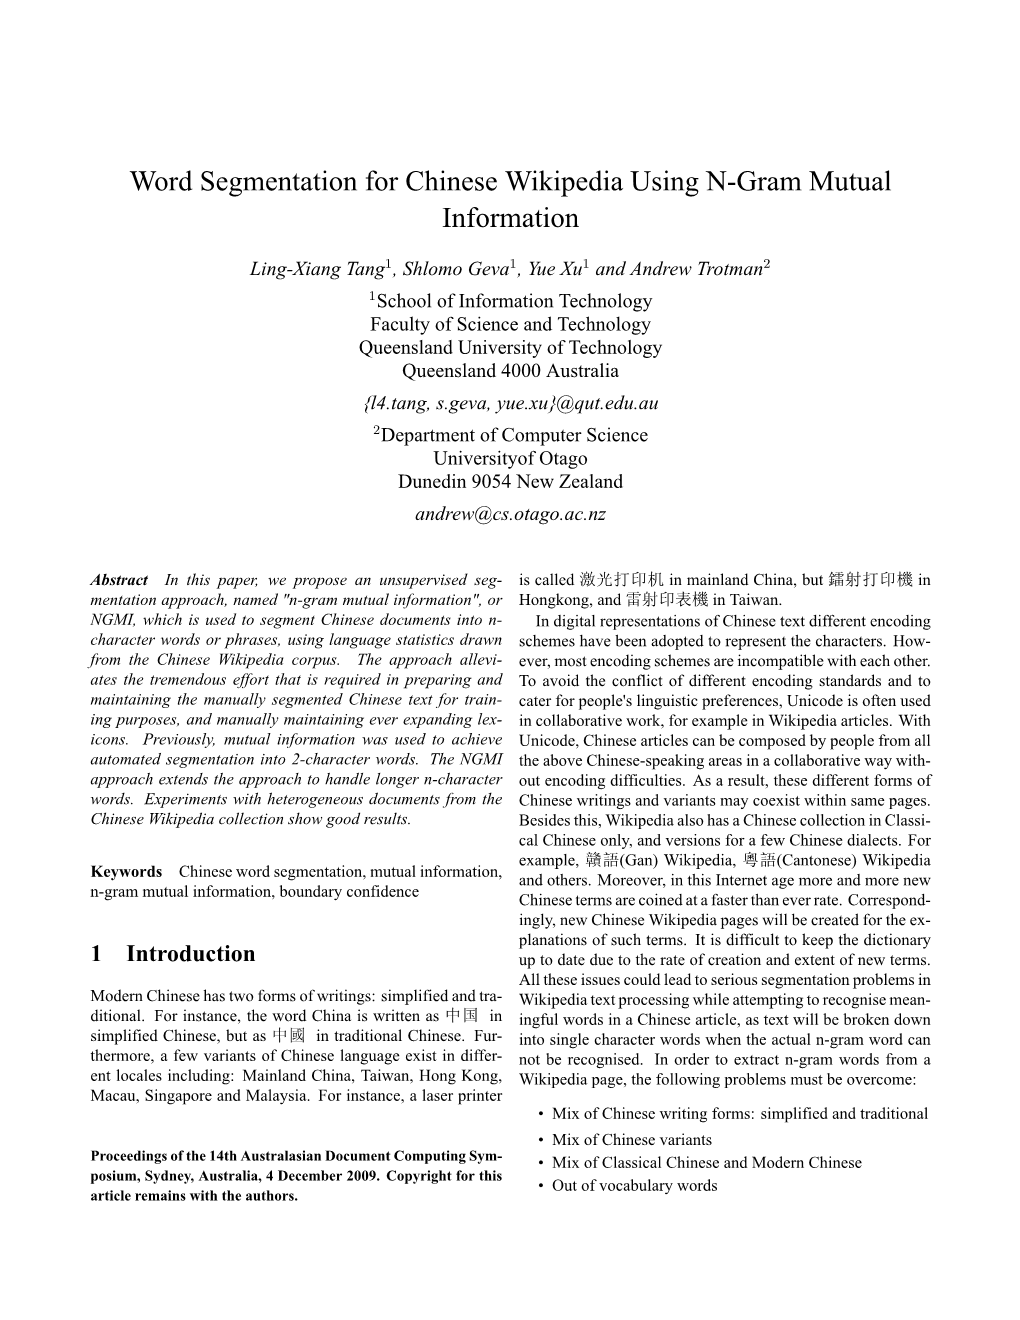 Word Segmentation for Chinese Wikipedia Using N-Gram Mutual Information